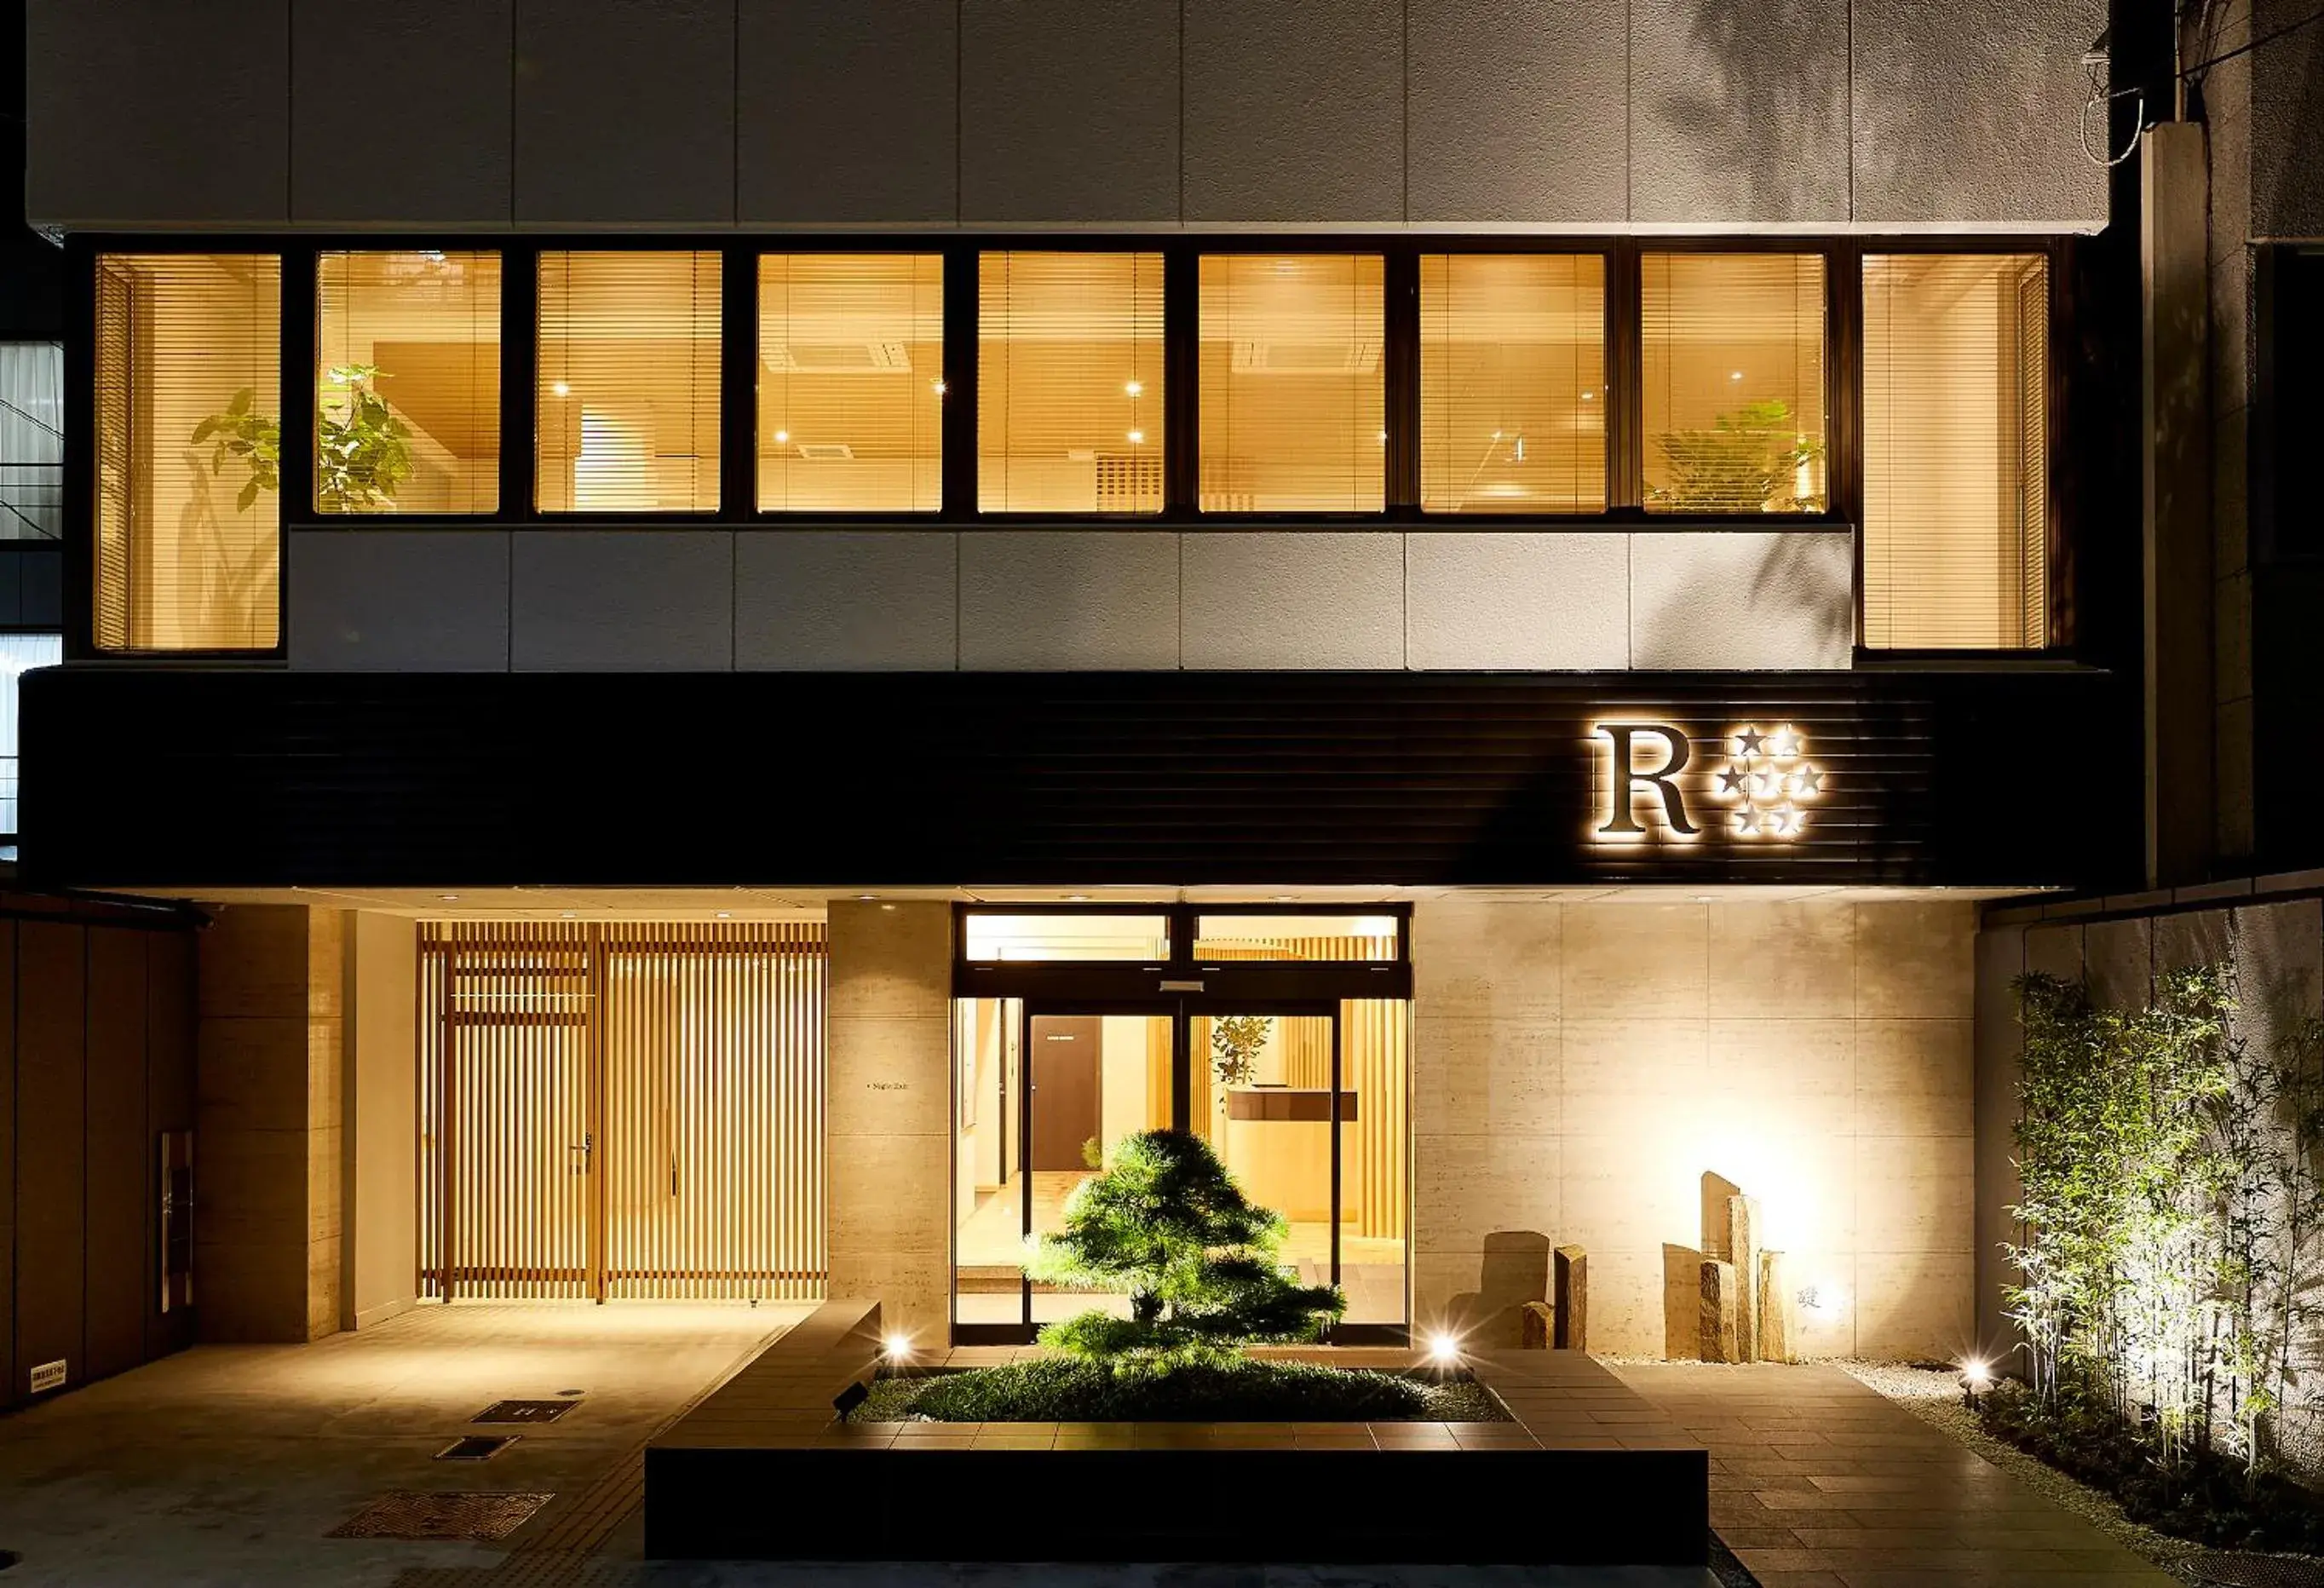 Facade/entrance in R. Star Hostel Kyoto Japan